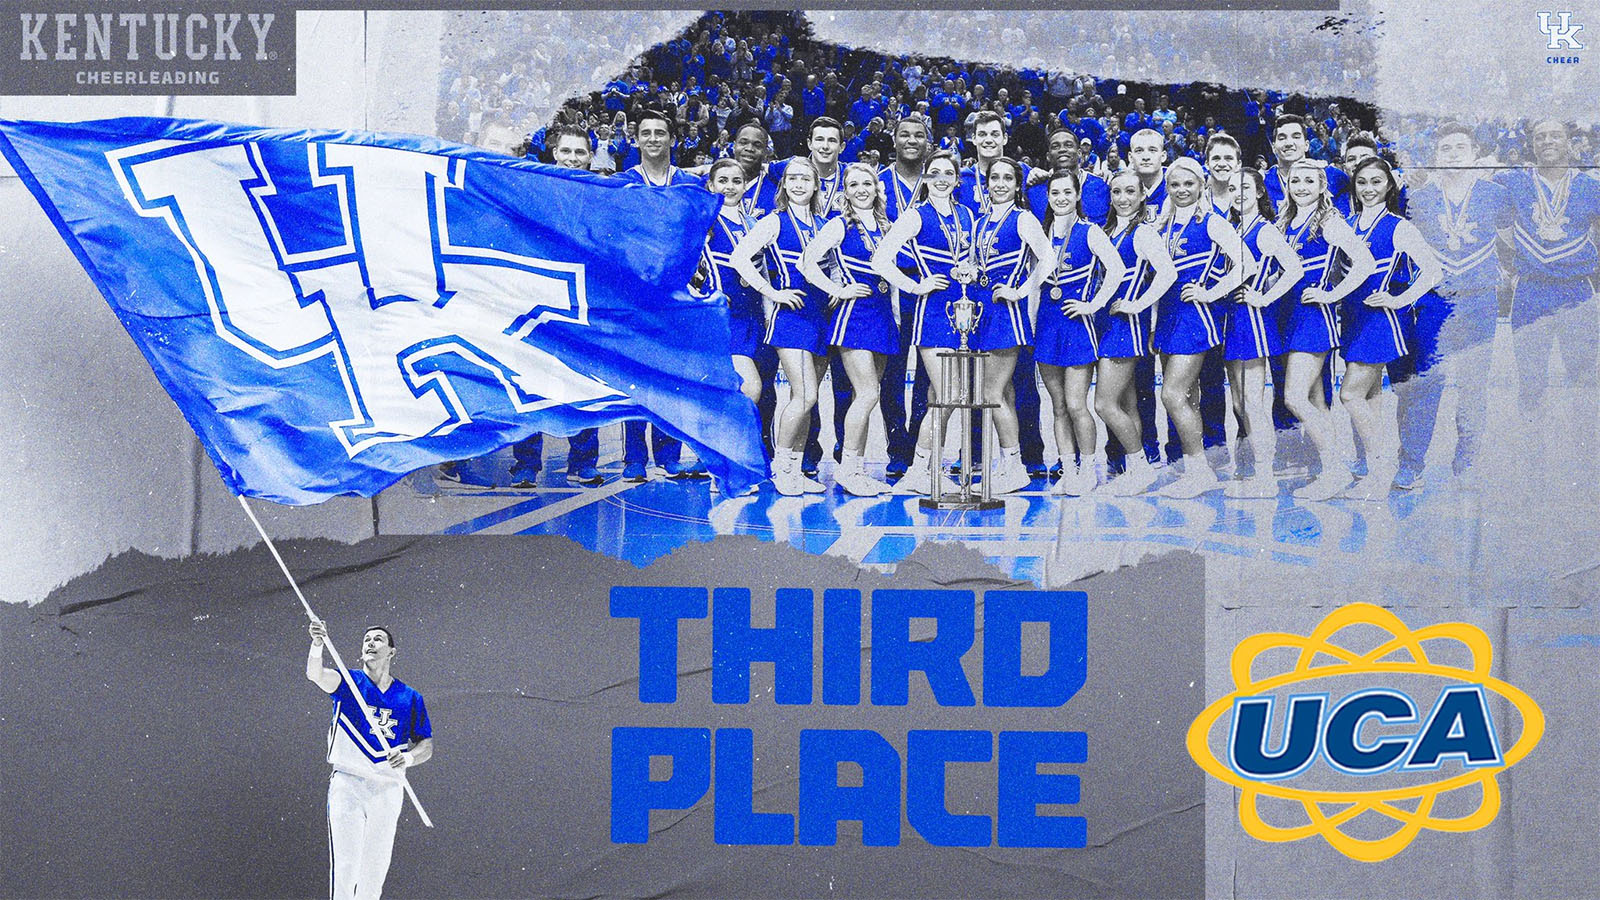 Kentucky Cheerleaders Place Third at Nationals